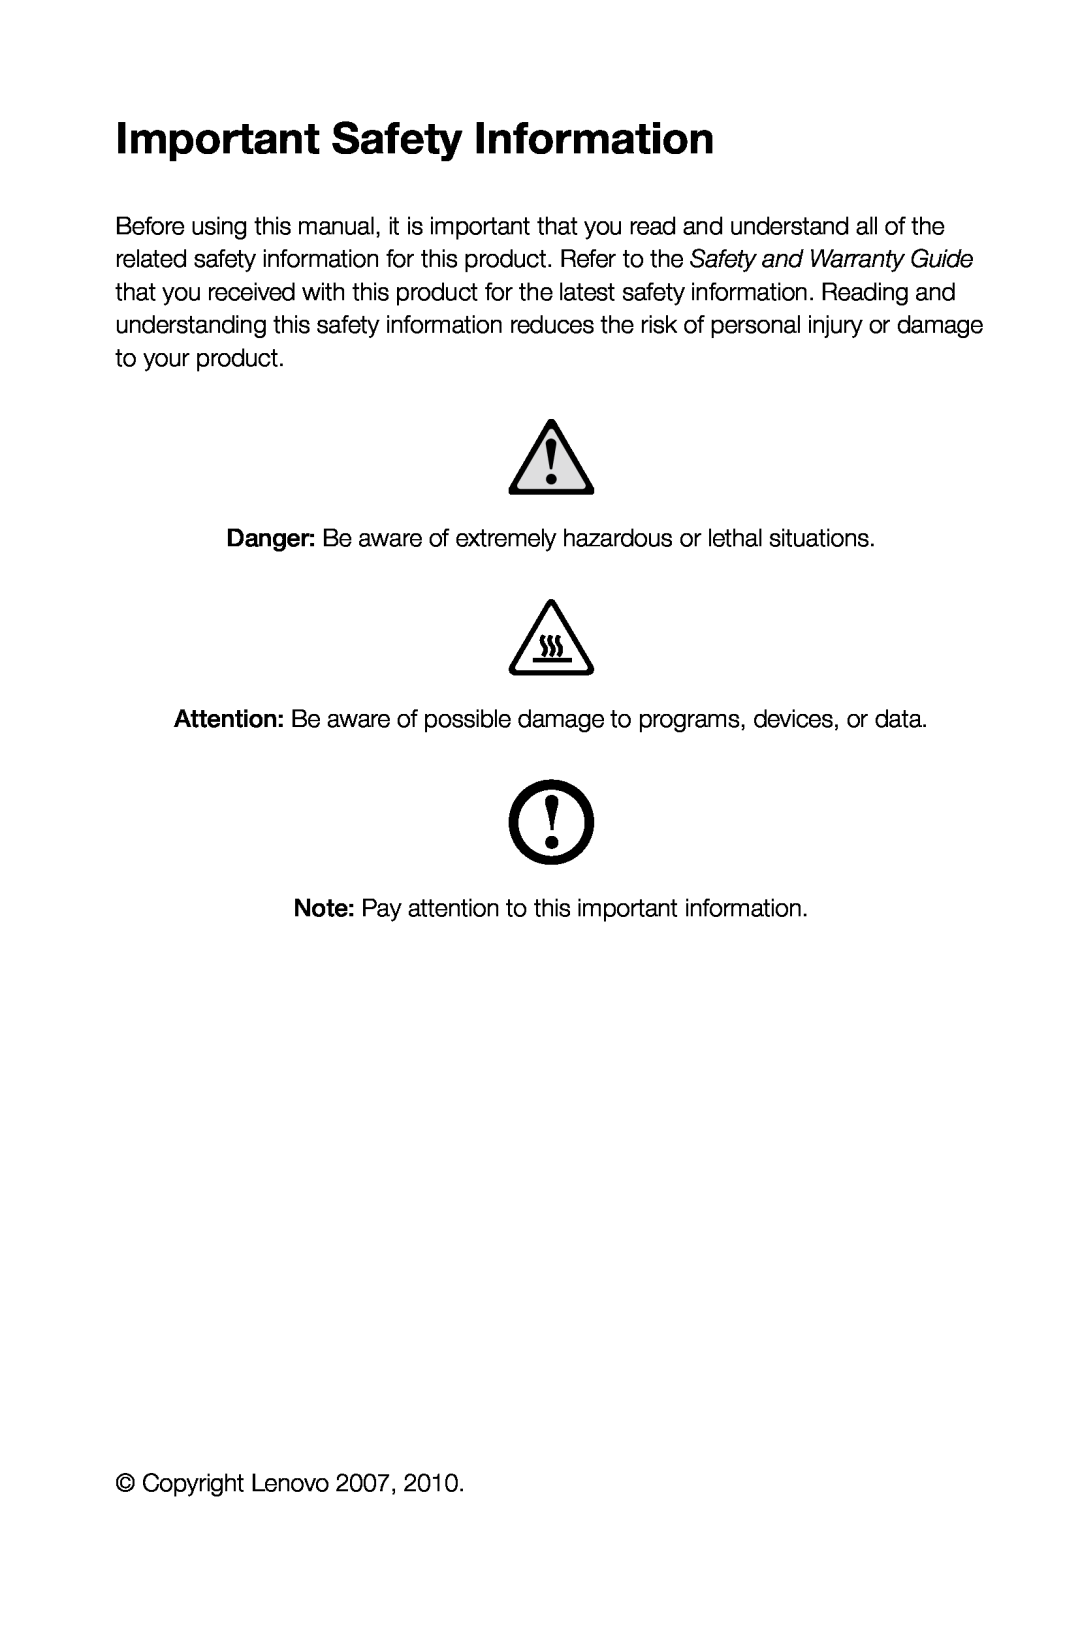 Lenovo K3 manual Important Safety Information 